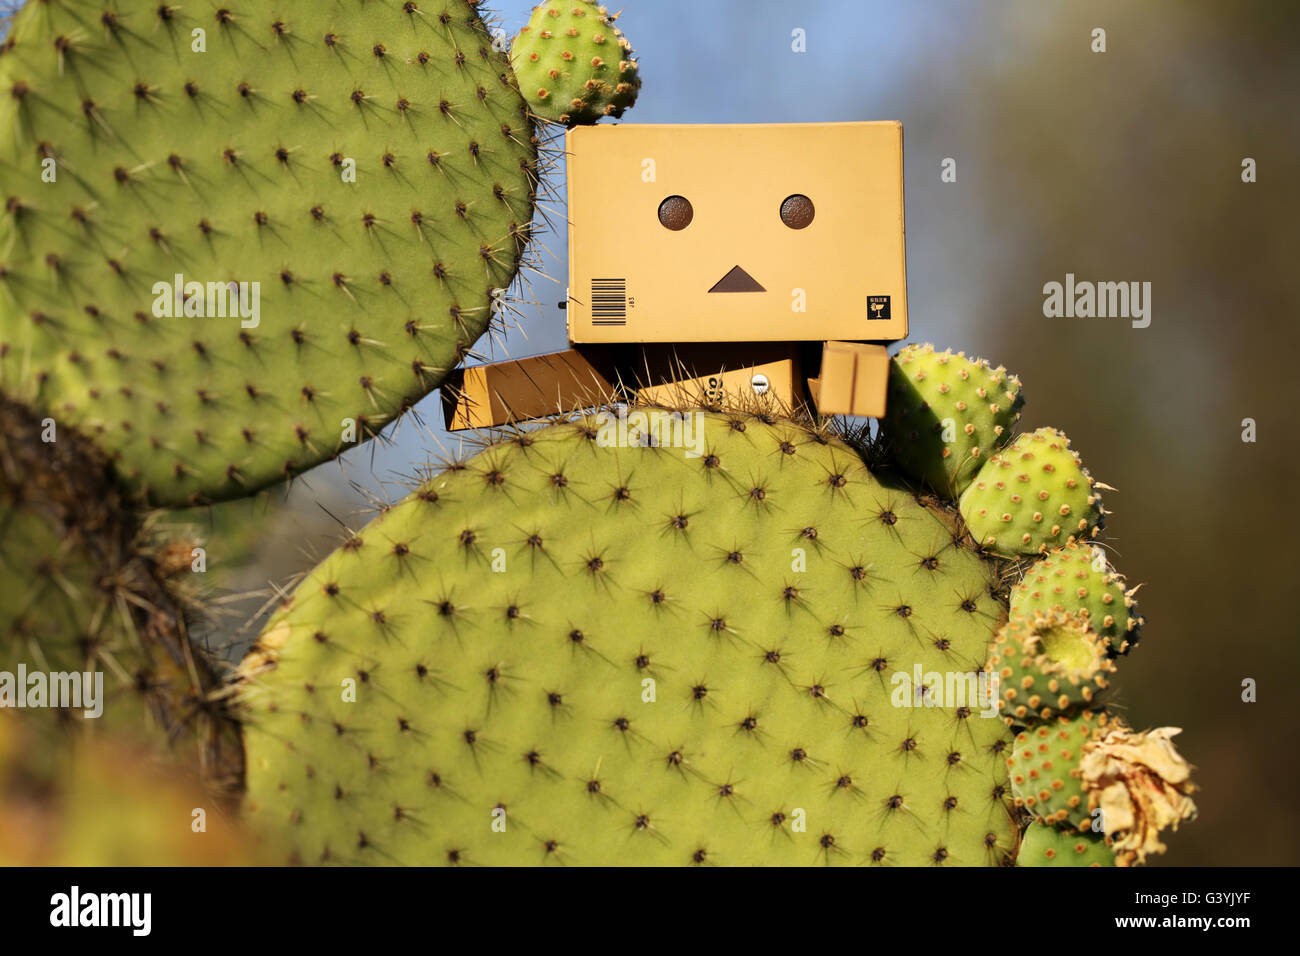 A Danbo Danboard fictional Robot Character hiding in amongst a cactus. is a fictional cardboard box robot character from Kiyohiko Azuma's manga series Stock Photo